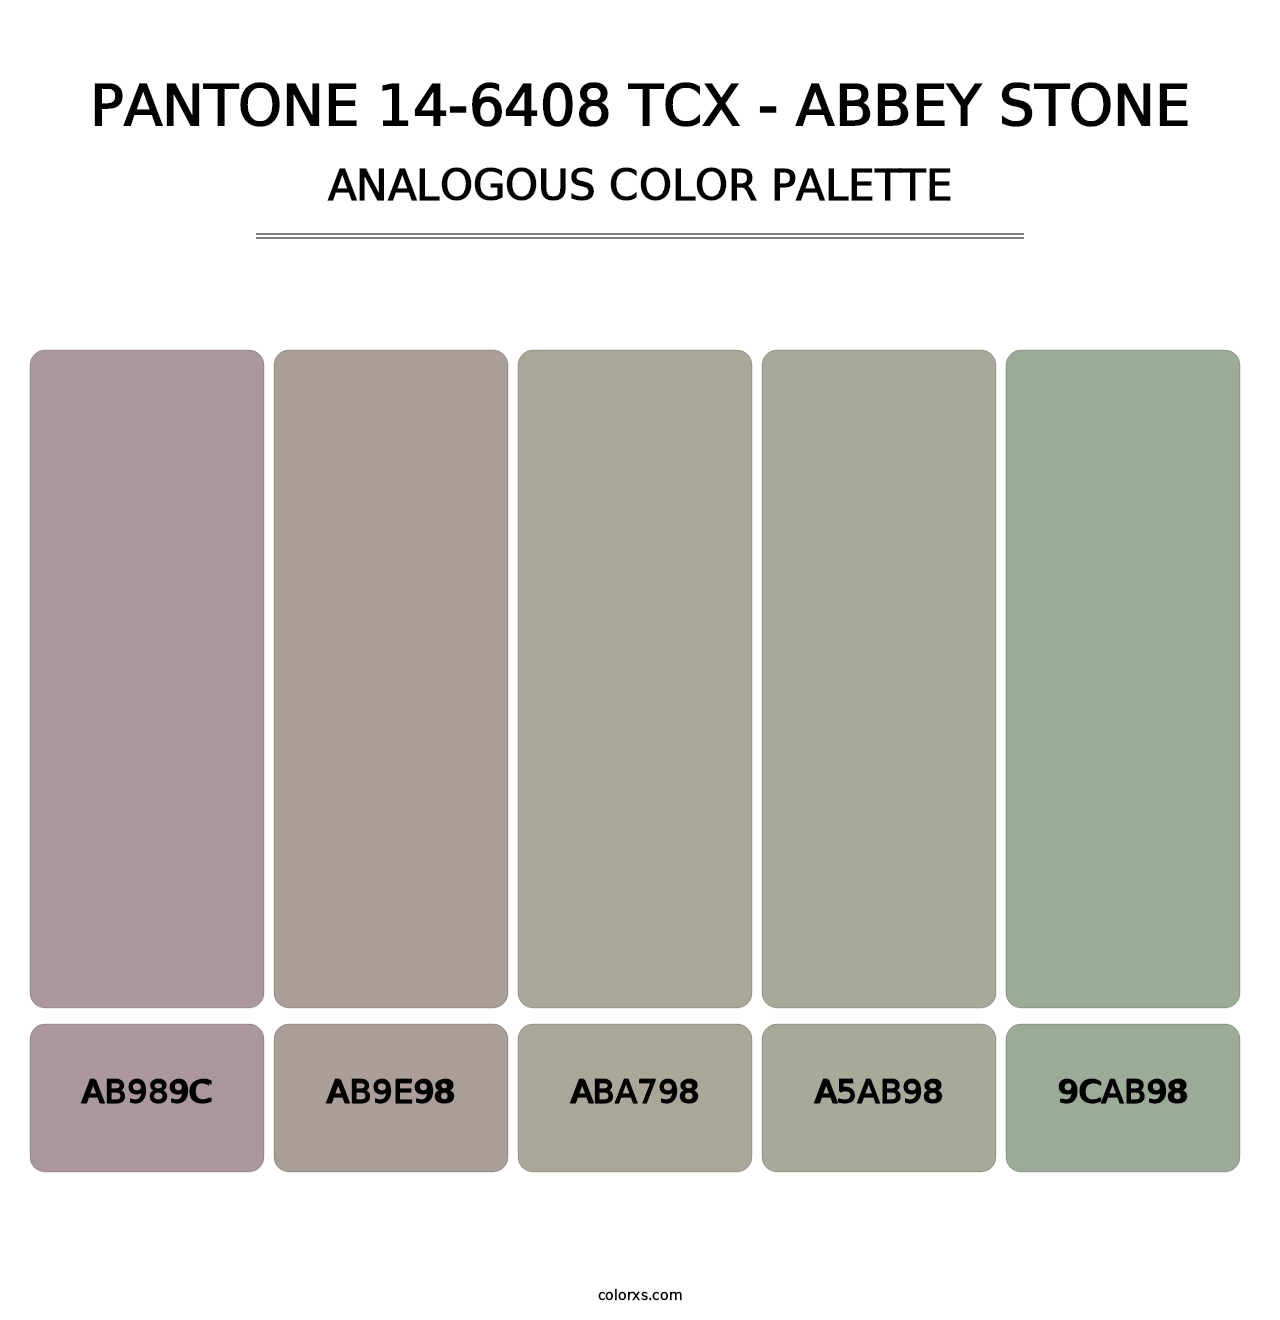 PANTONE 14-6408 TCX - Abbey Stone - Analogous Color Palette